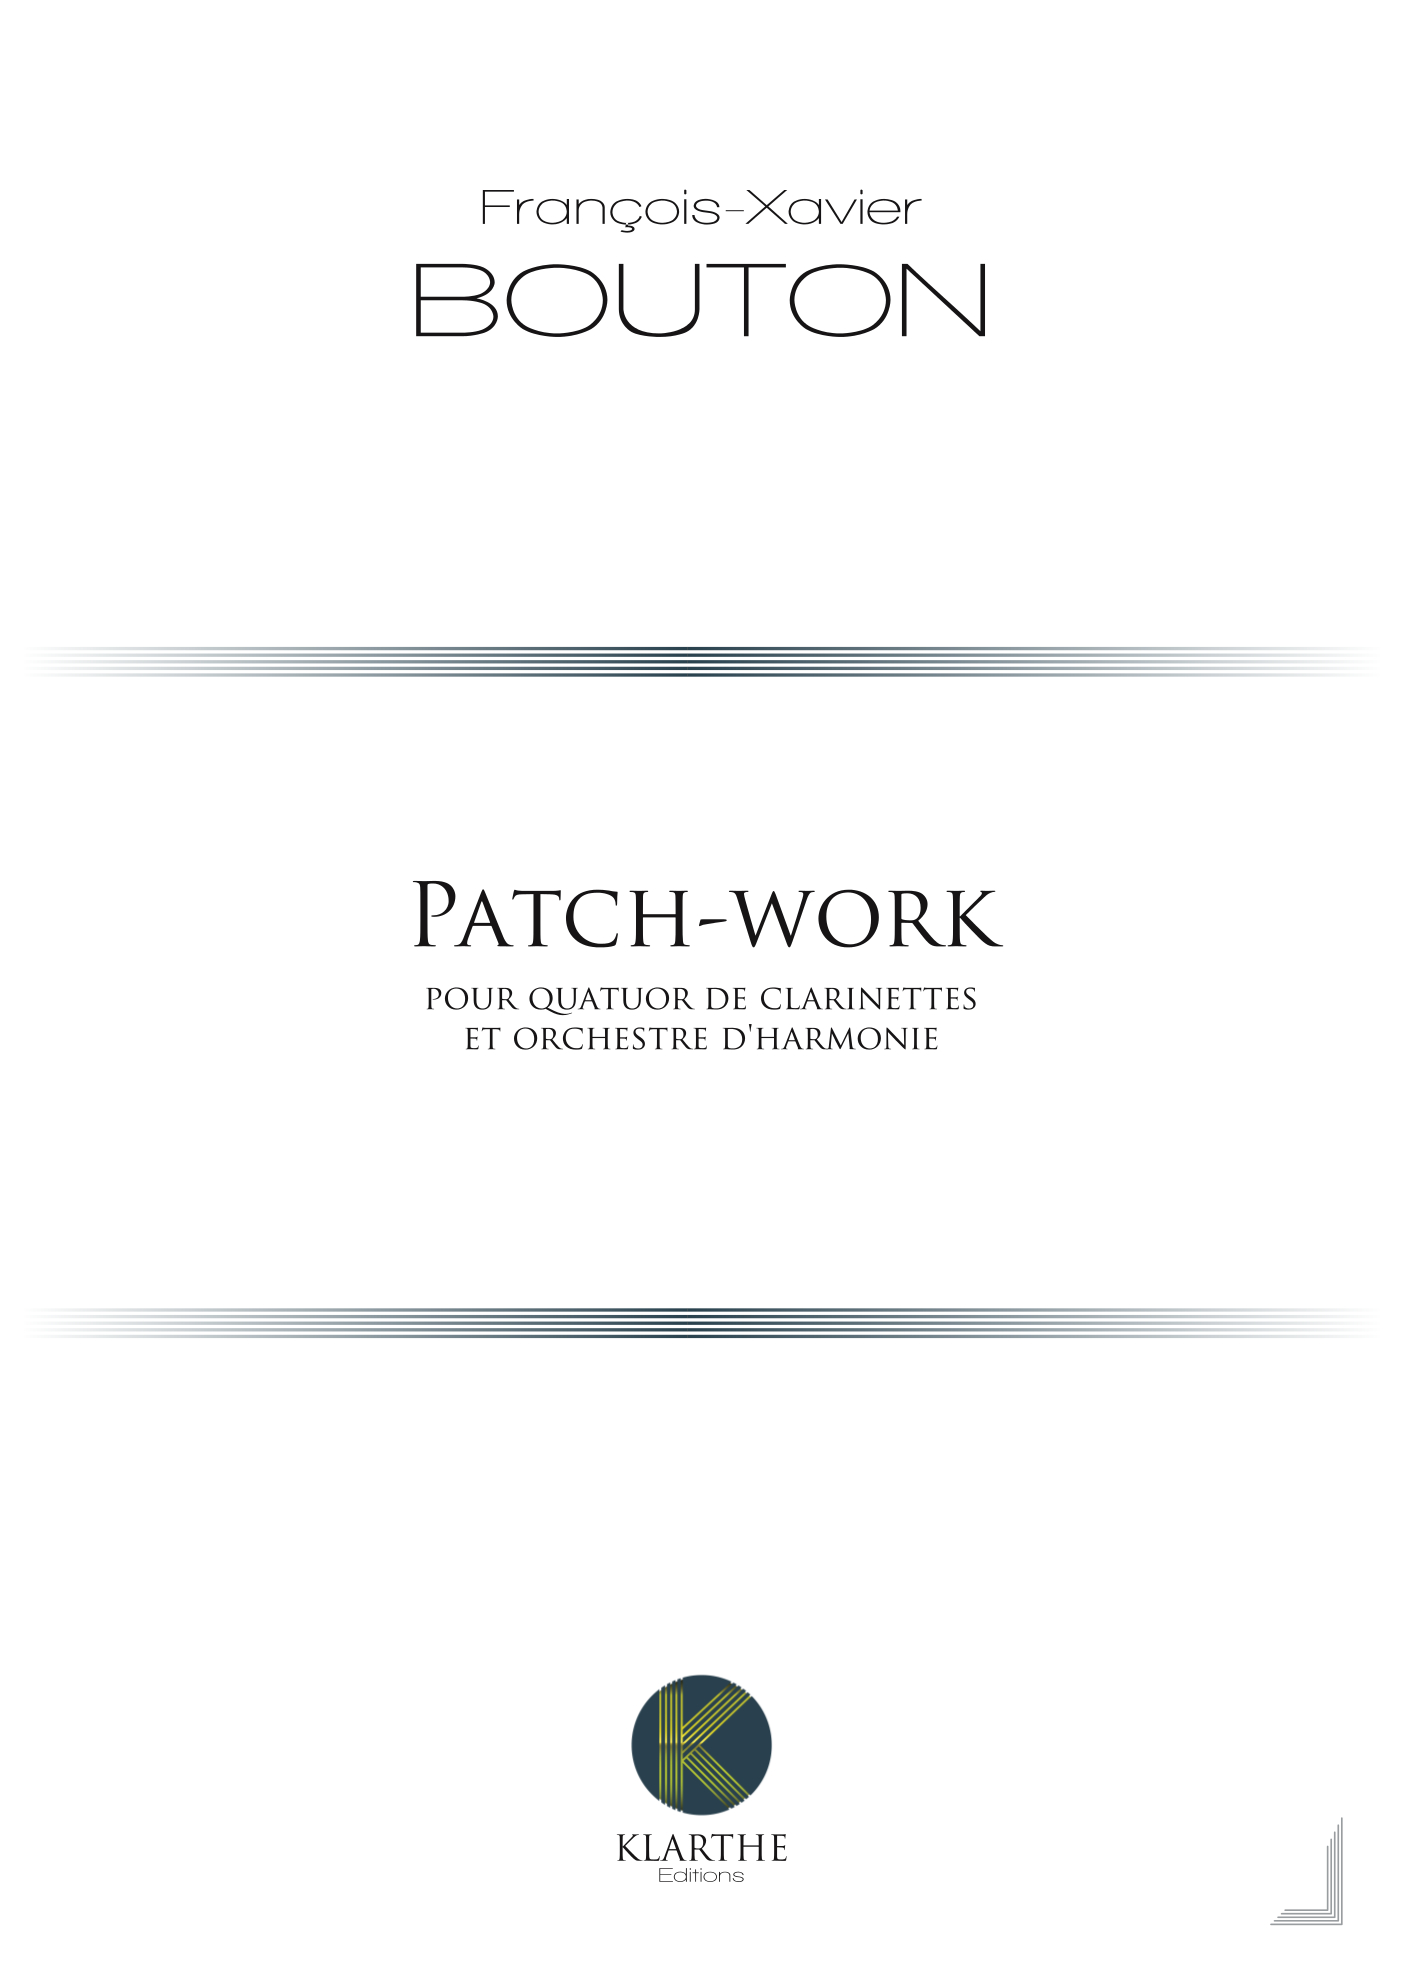 Patch-Work (BOUTON FRANCOIS-XAVIER)